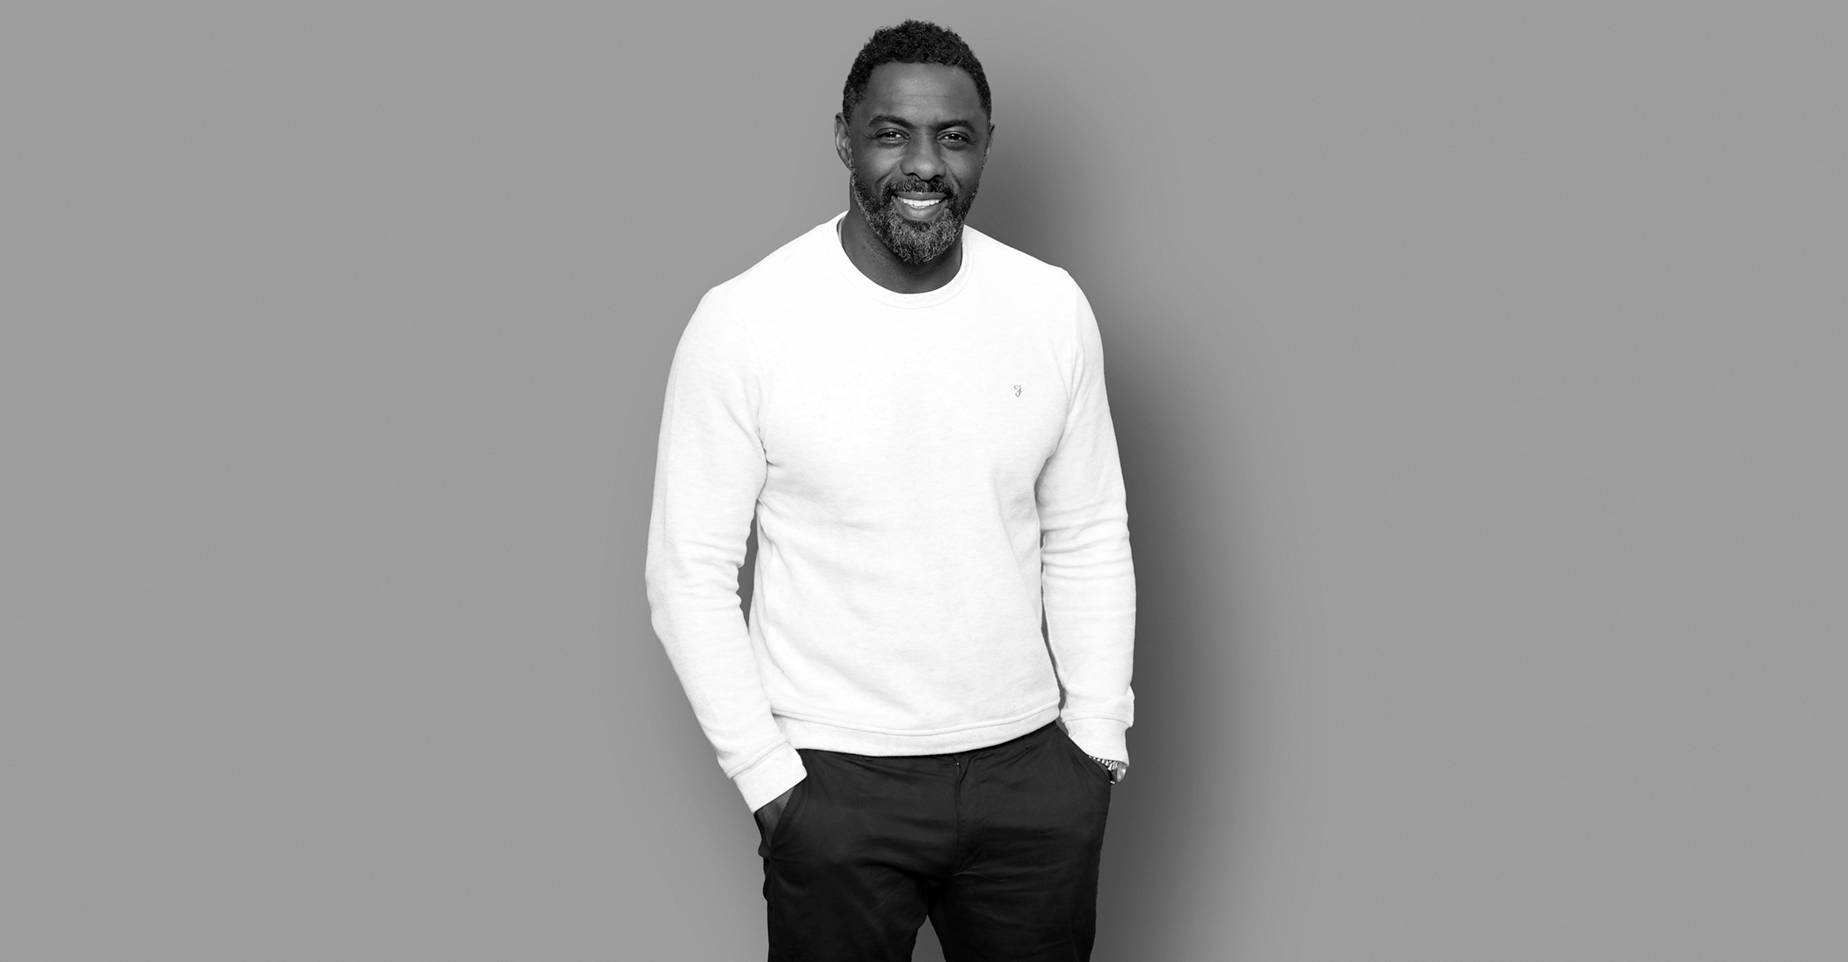 Idris Elba Medium-shot Body Picture Background